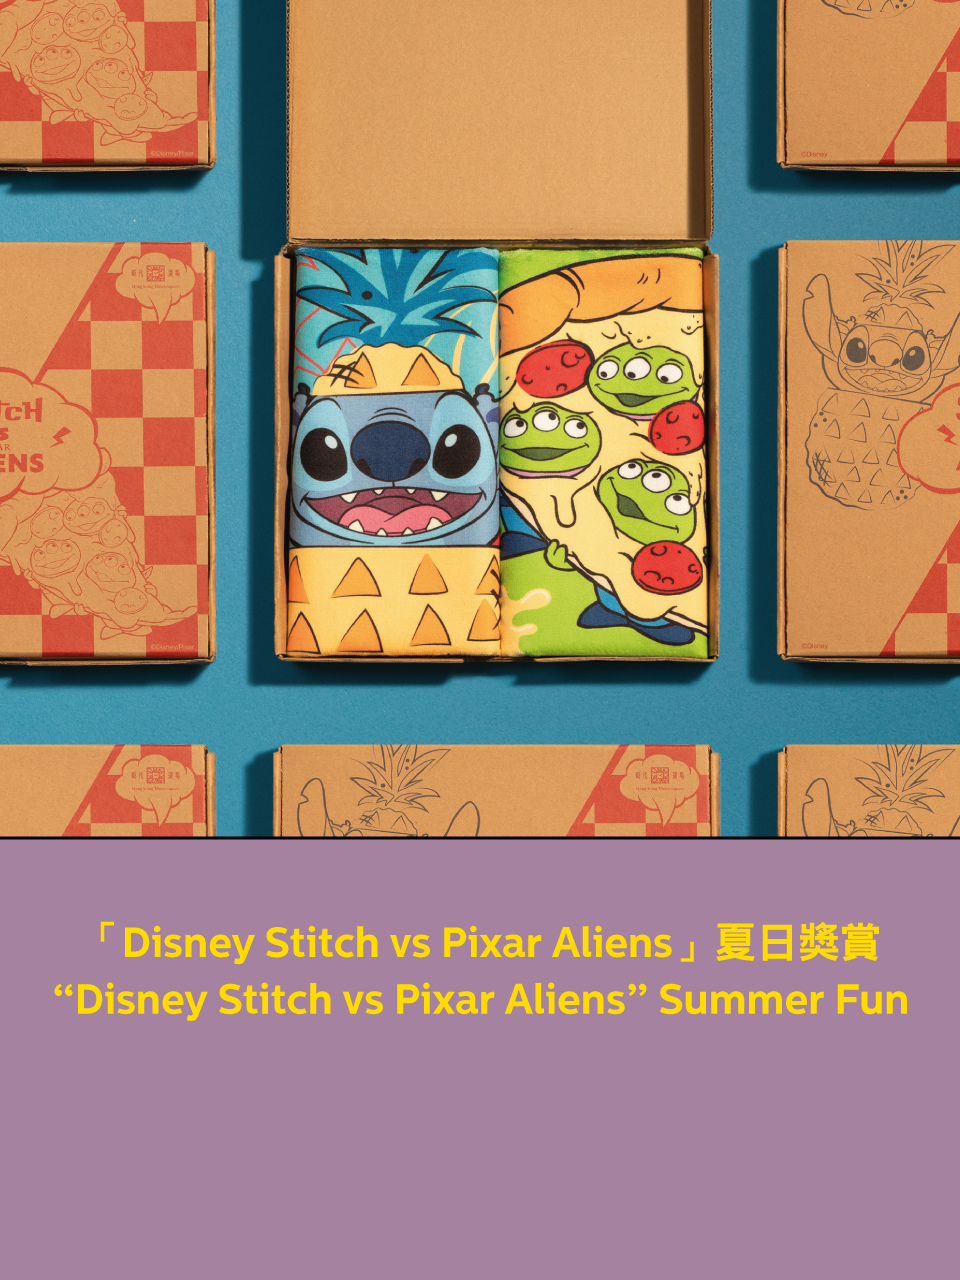 “Disney Stitch vs Pixar Aliens” Summer Fun